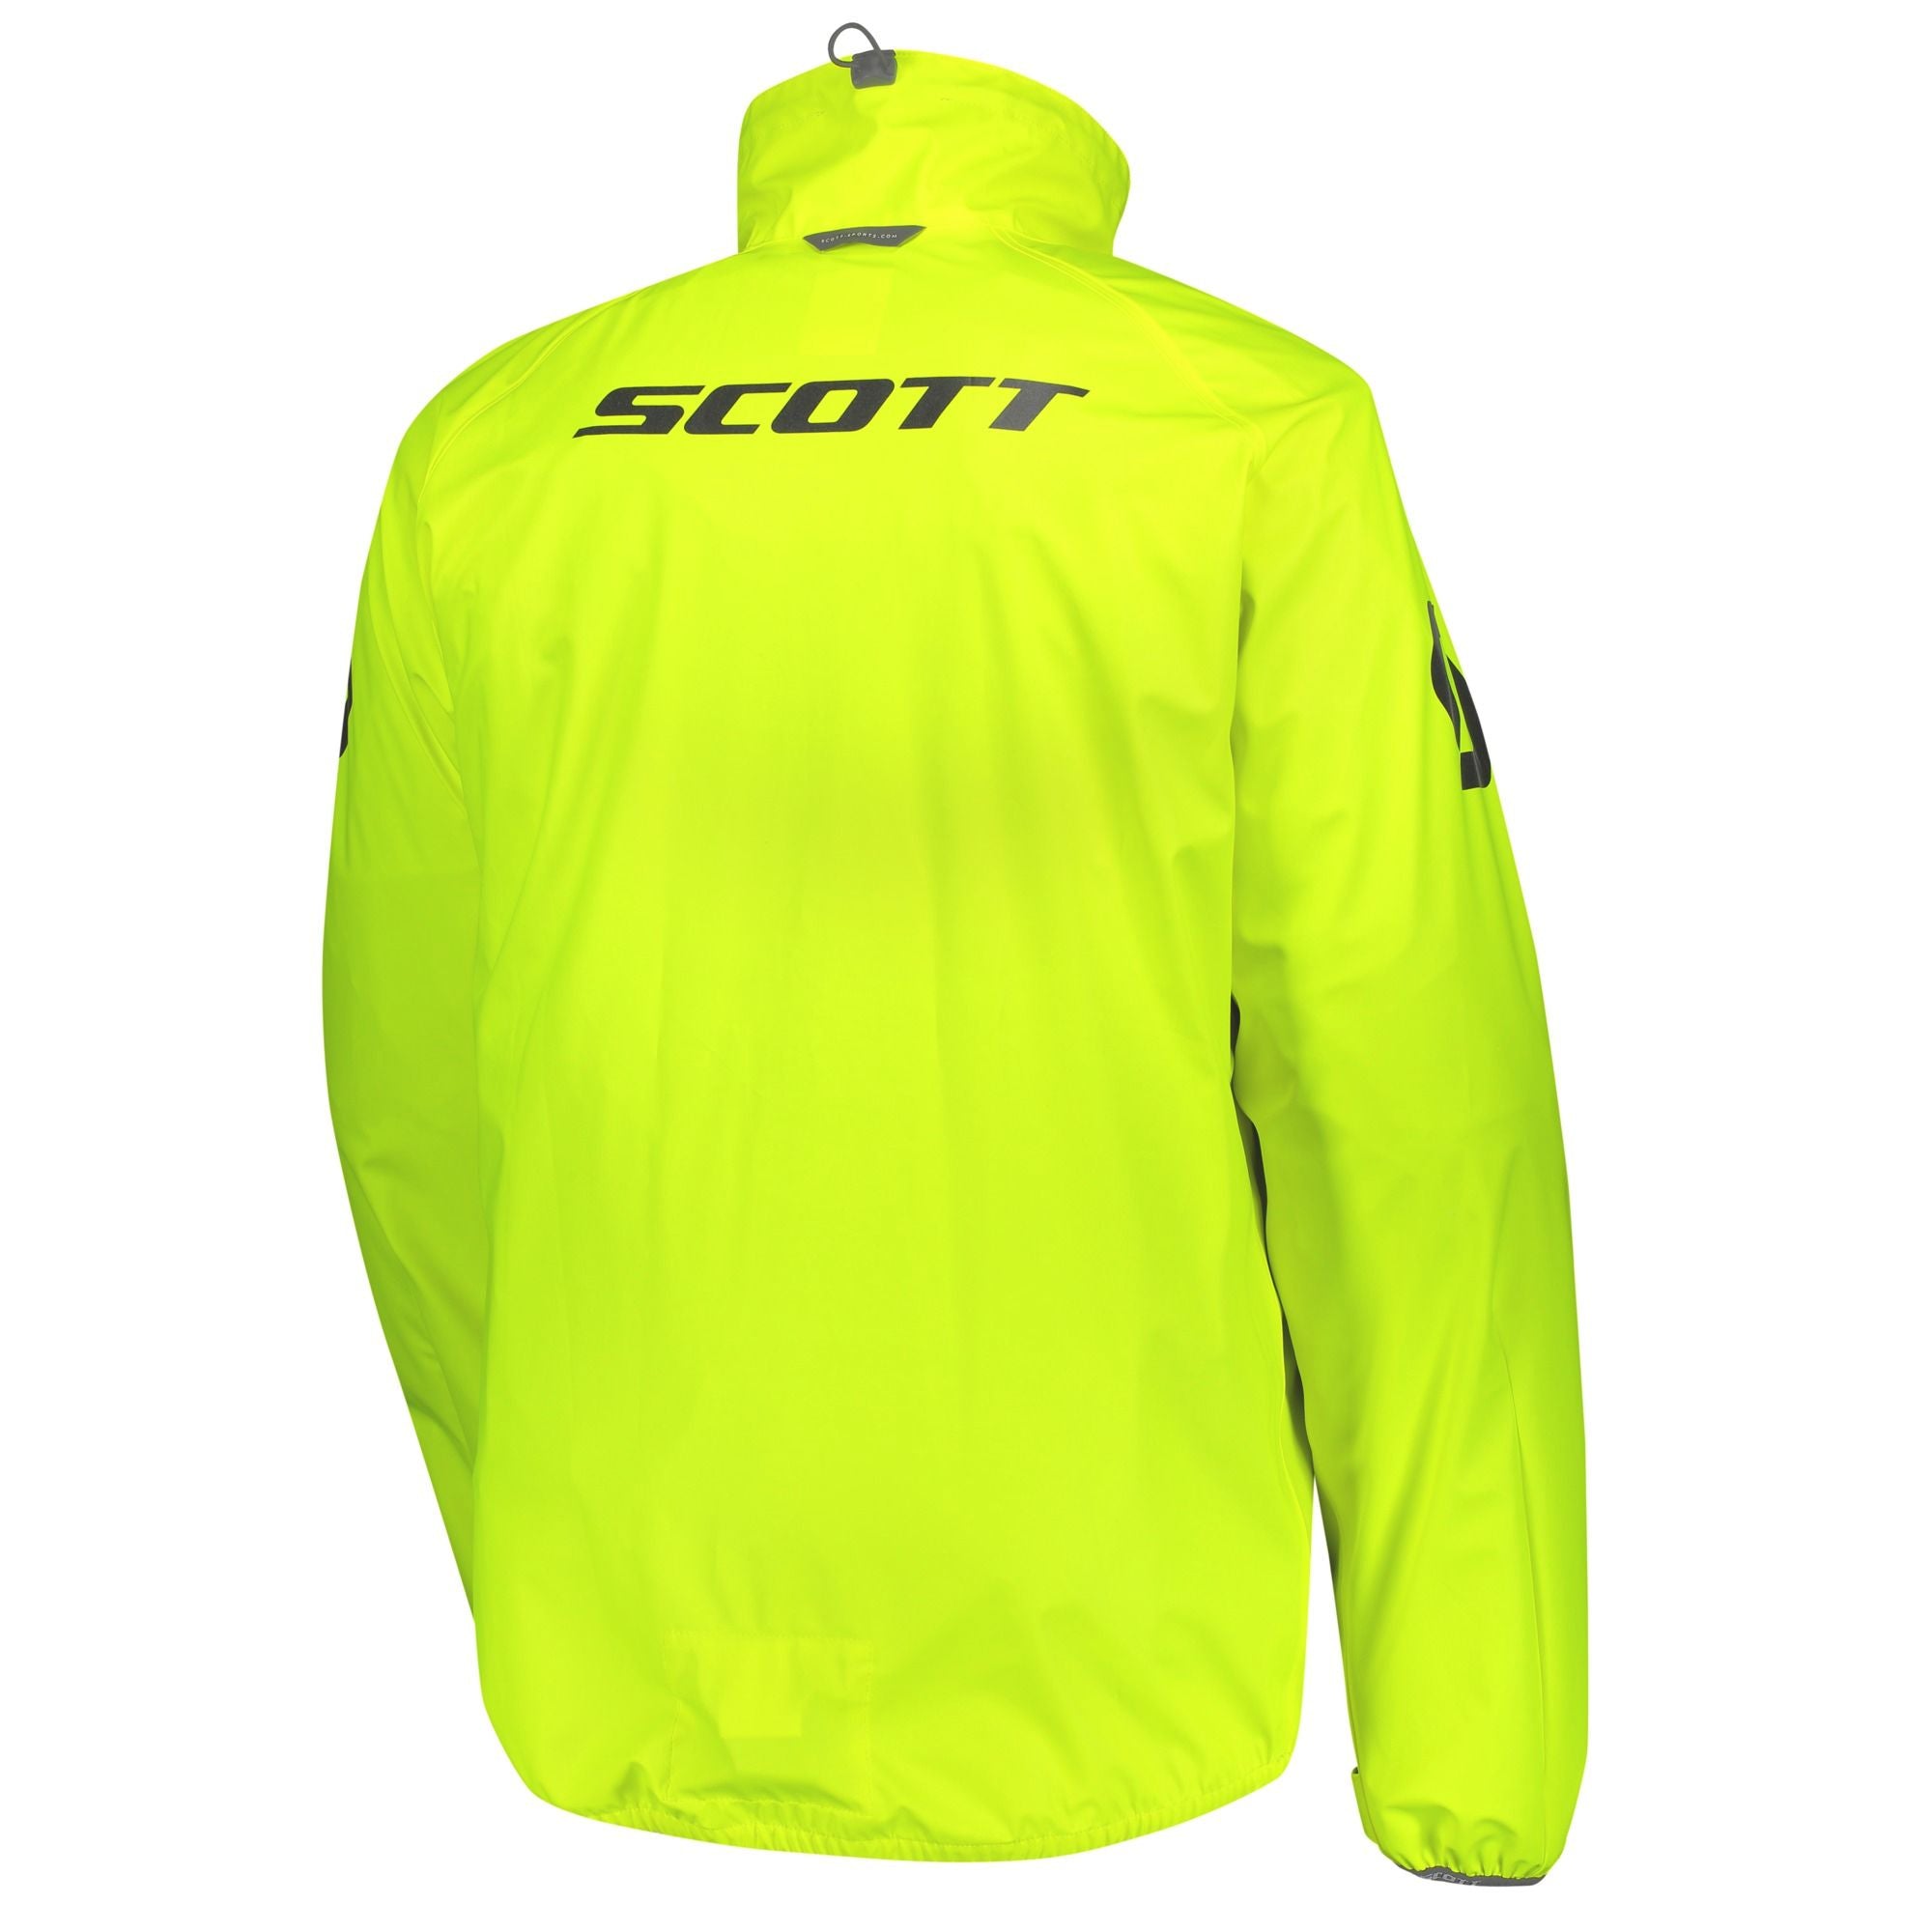 Scott - Ergonomic Pro DP Rain Jacket